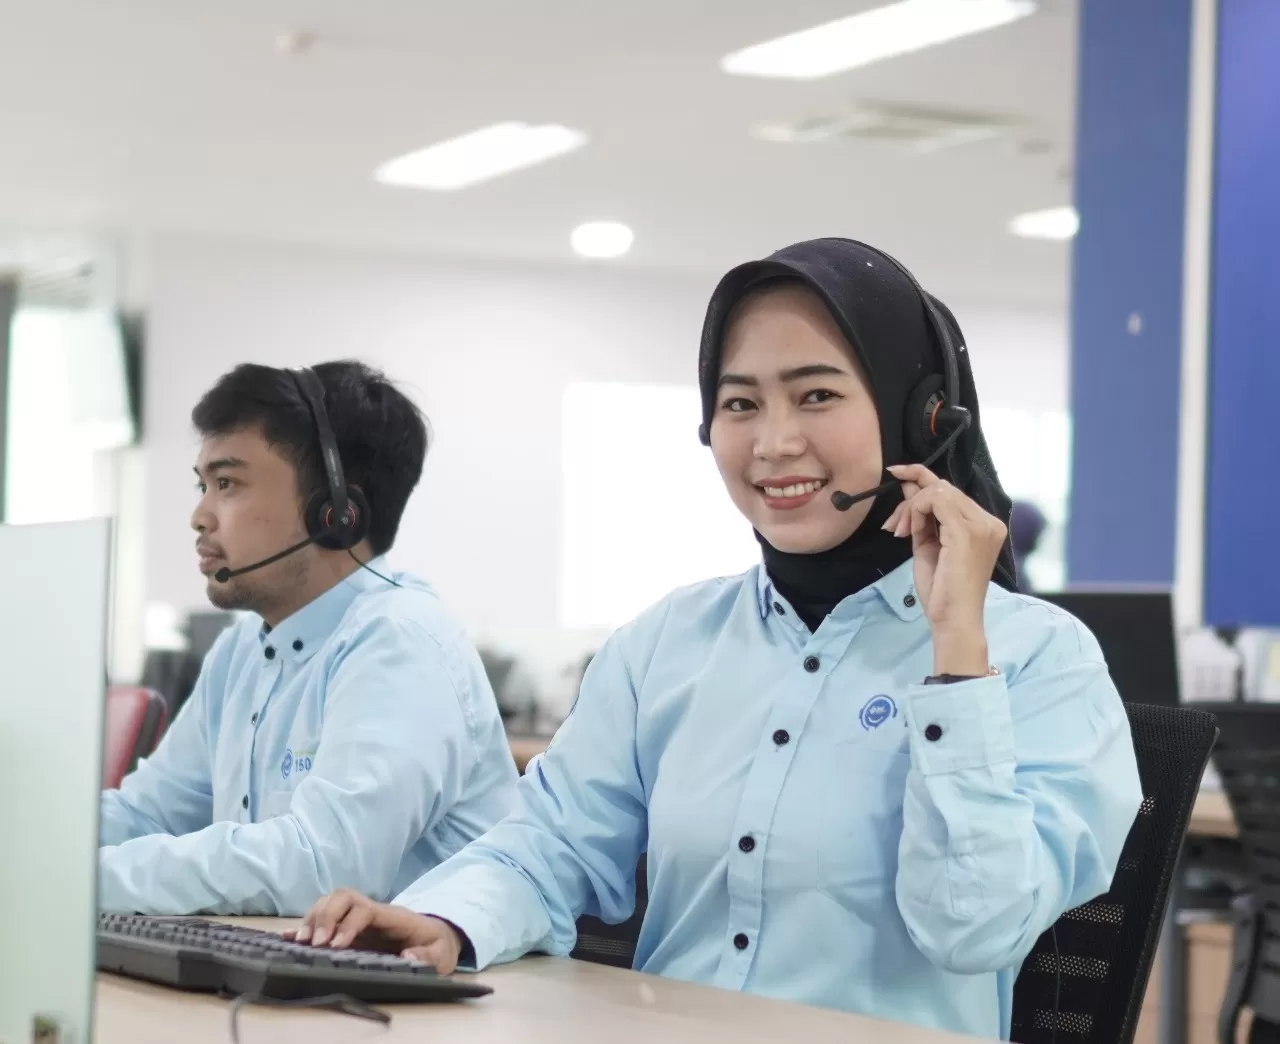 Tingkatkan Layanan Informasi, Holding RS BUMN Luncurkan Layanan Chatbot 24 Jam (DOK.PT Pertamina Bina Medika - Indonesia Healthcare Corporation (Pertamedika IHC))